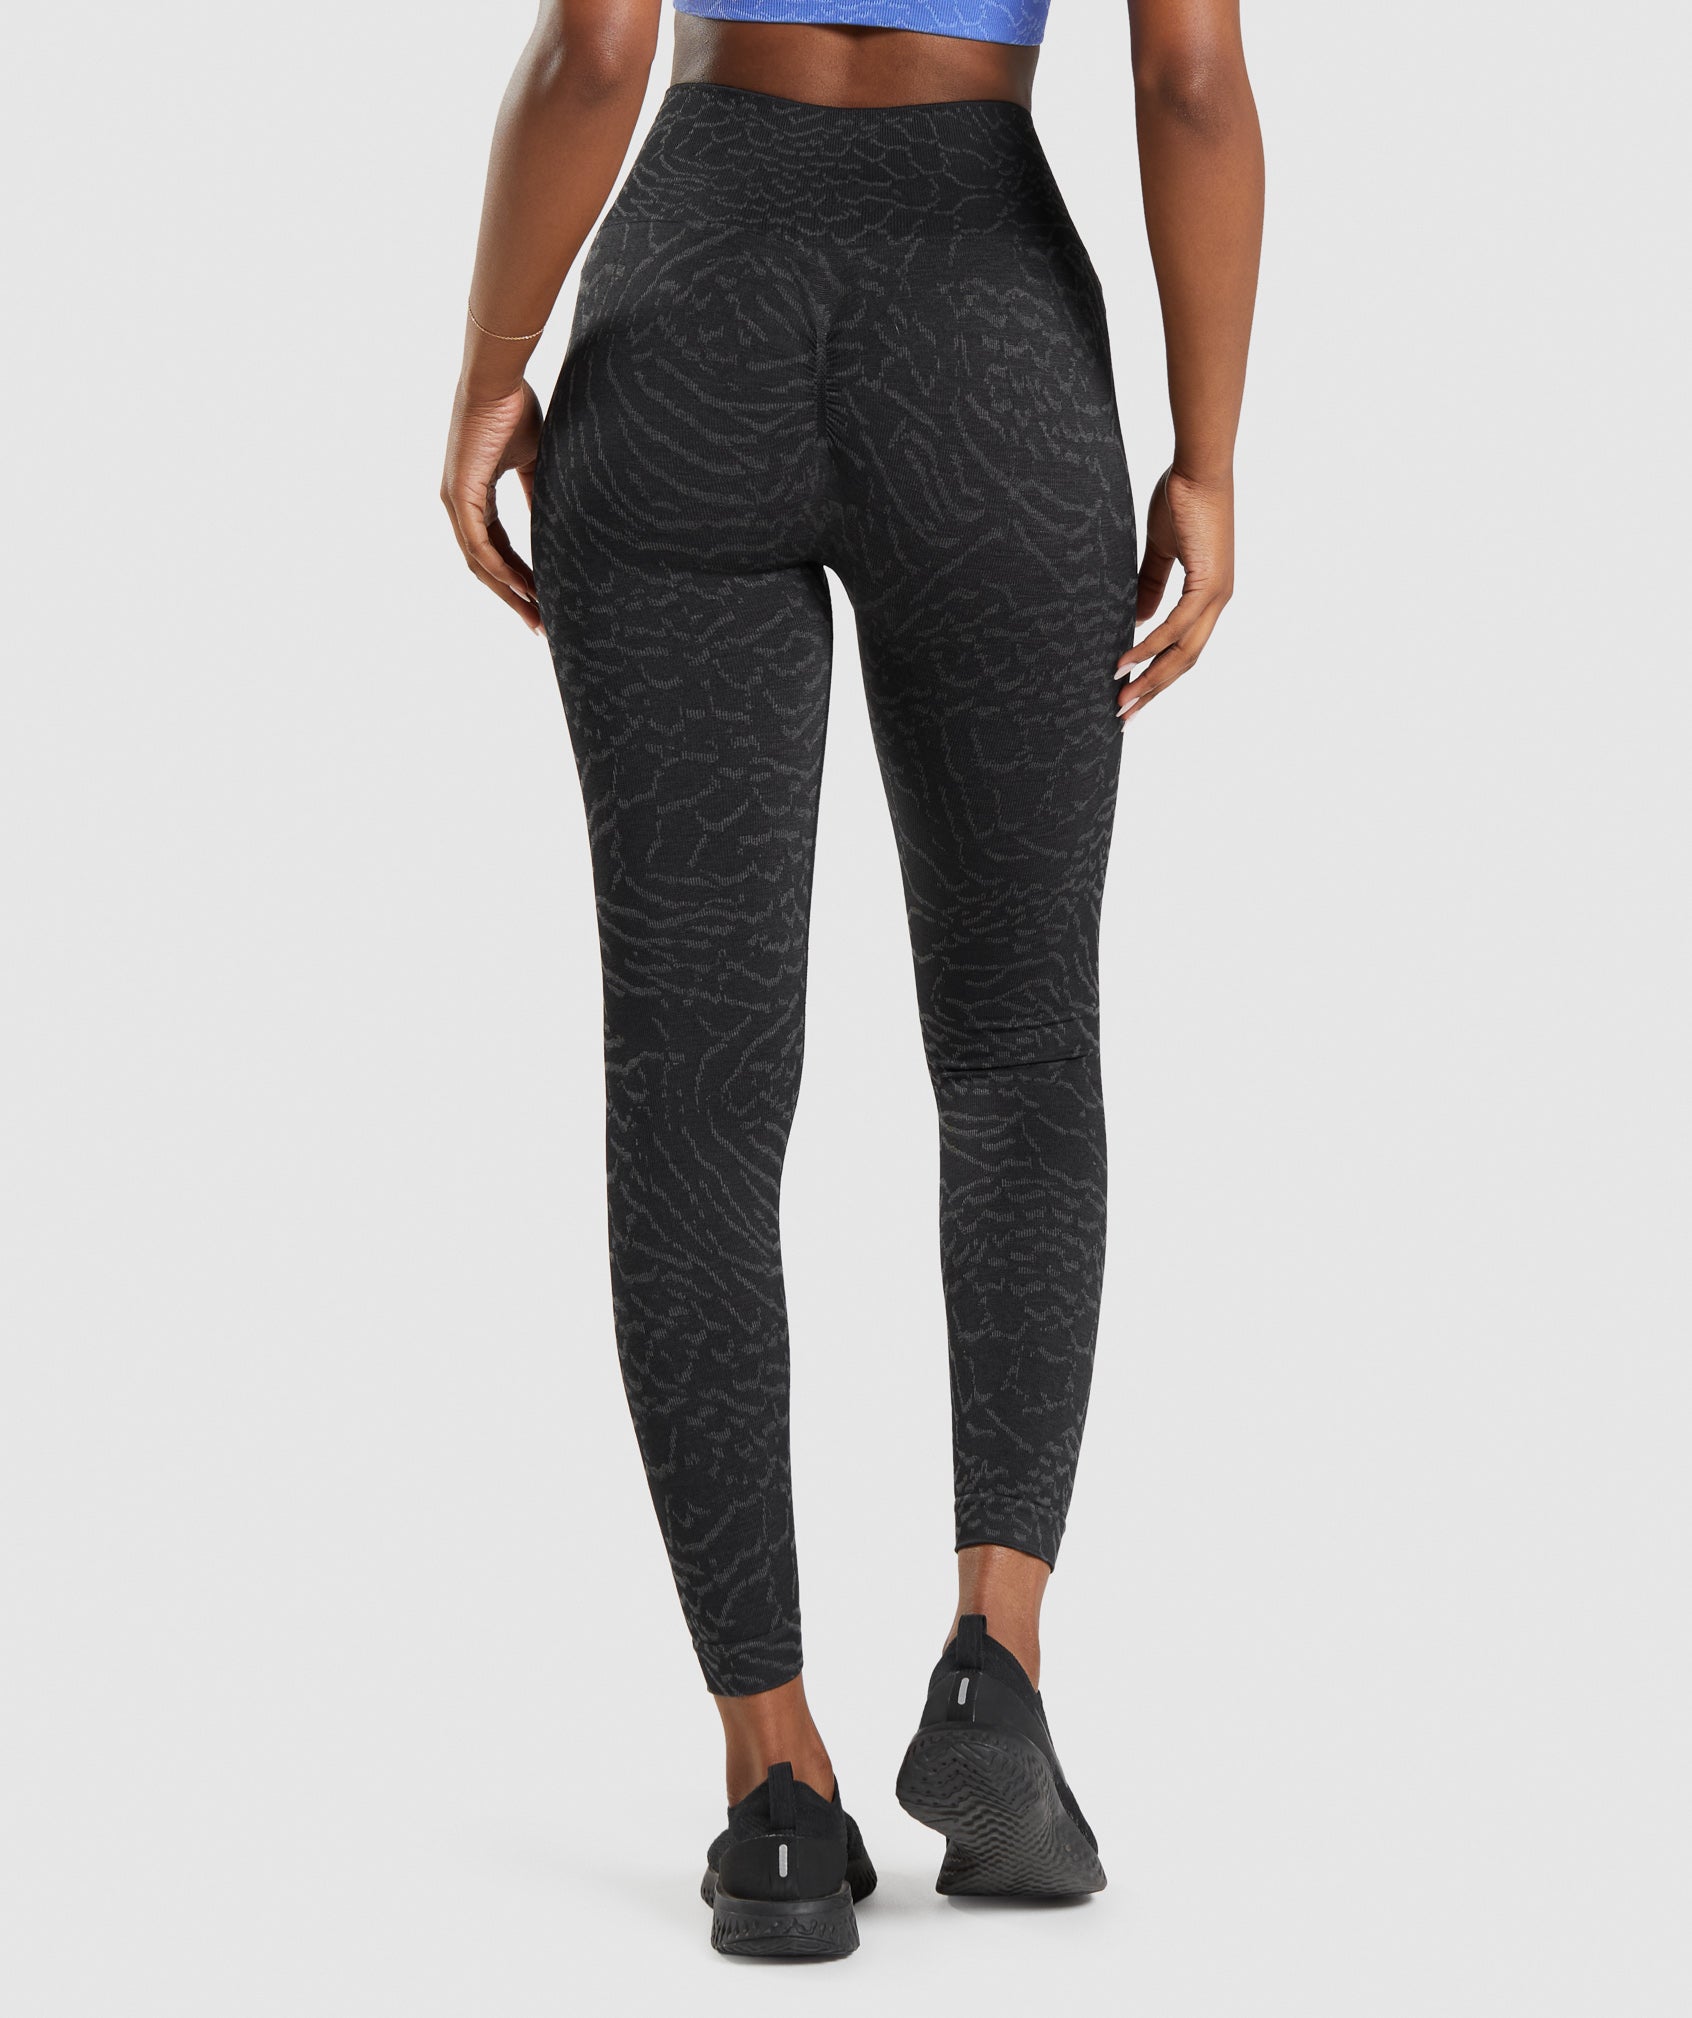 Gymshark Adapt Seamless Marl Leggings - Black/Dark Grey - Women's Size XS